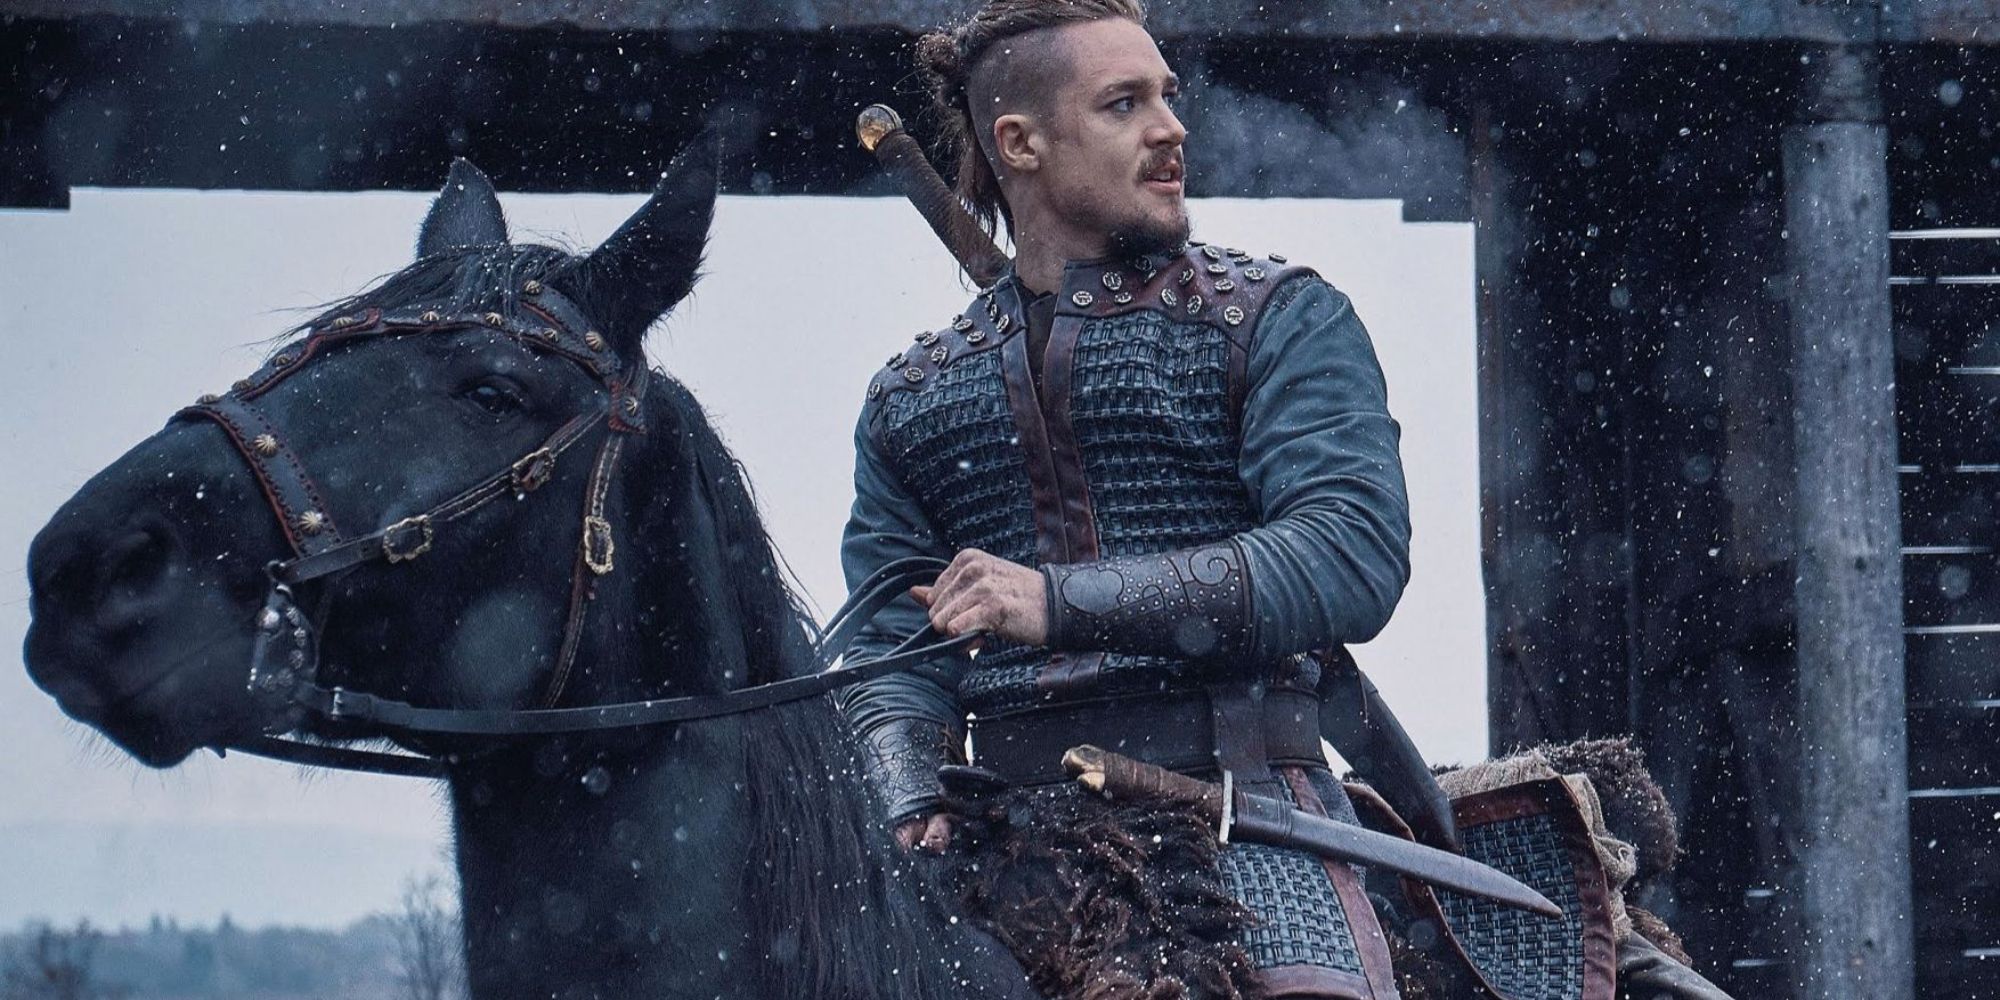 Alexander Dreymon as Uhtred of Bebbanburg in Netflix's The Last Kingdom on horseback